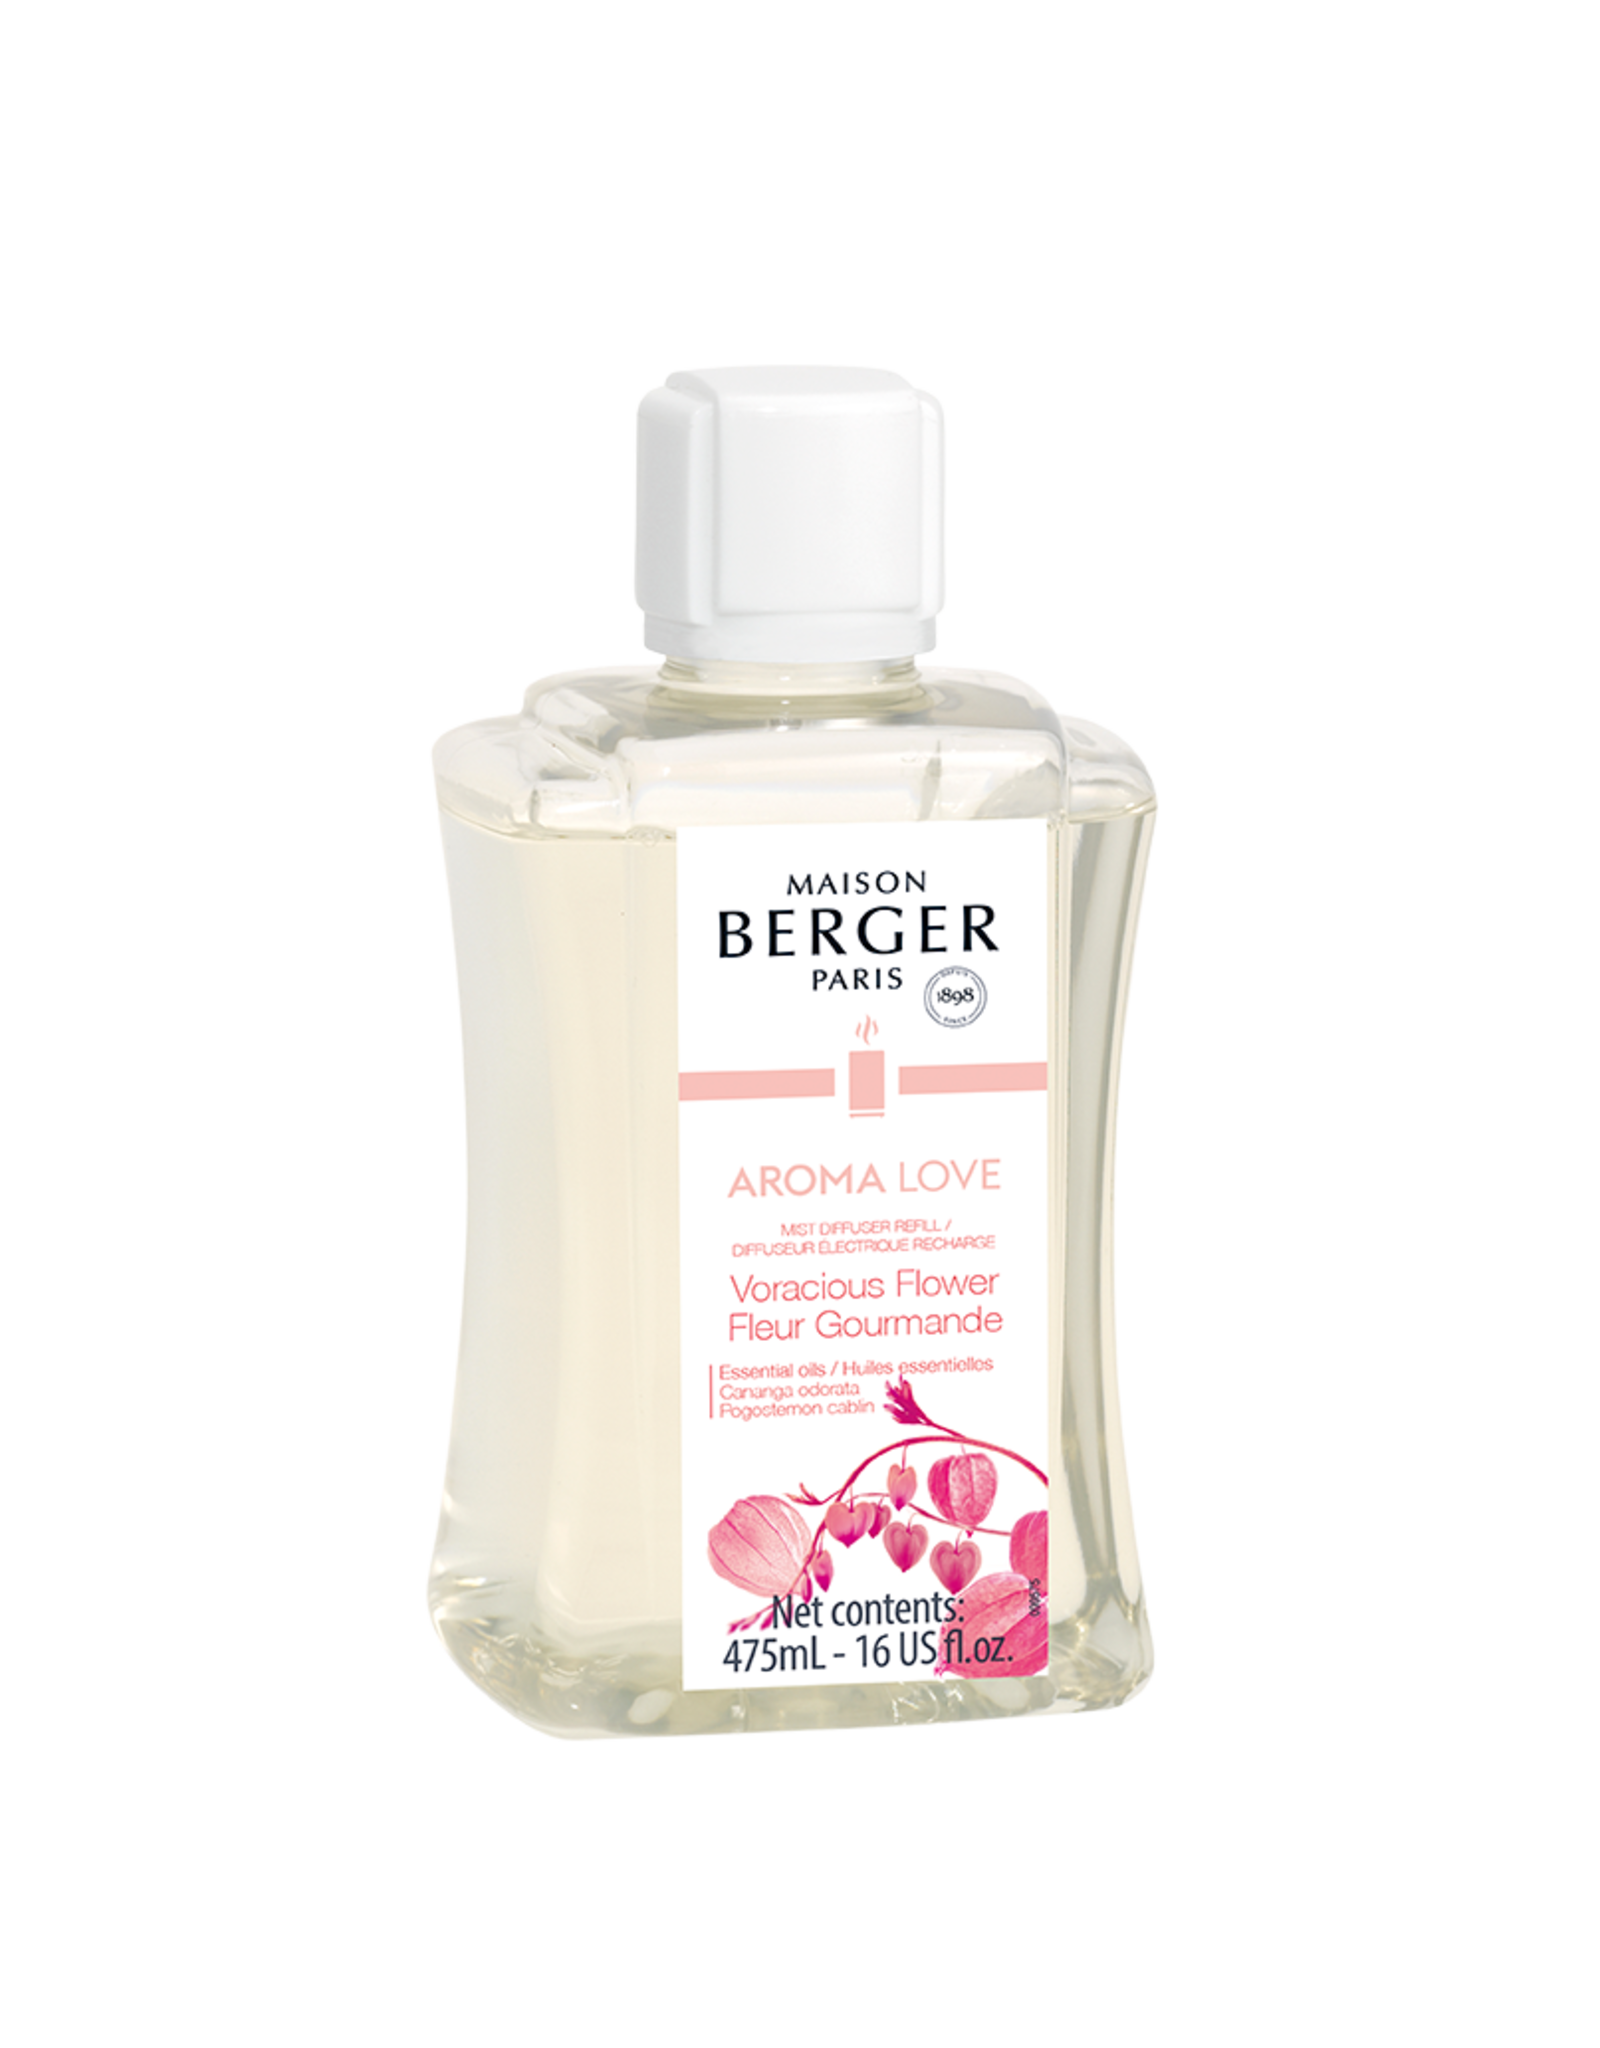 Maison Berger Mist Diffuser Fragrance 475ml Refill Aroma Love Voracious Flower